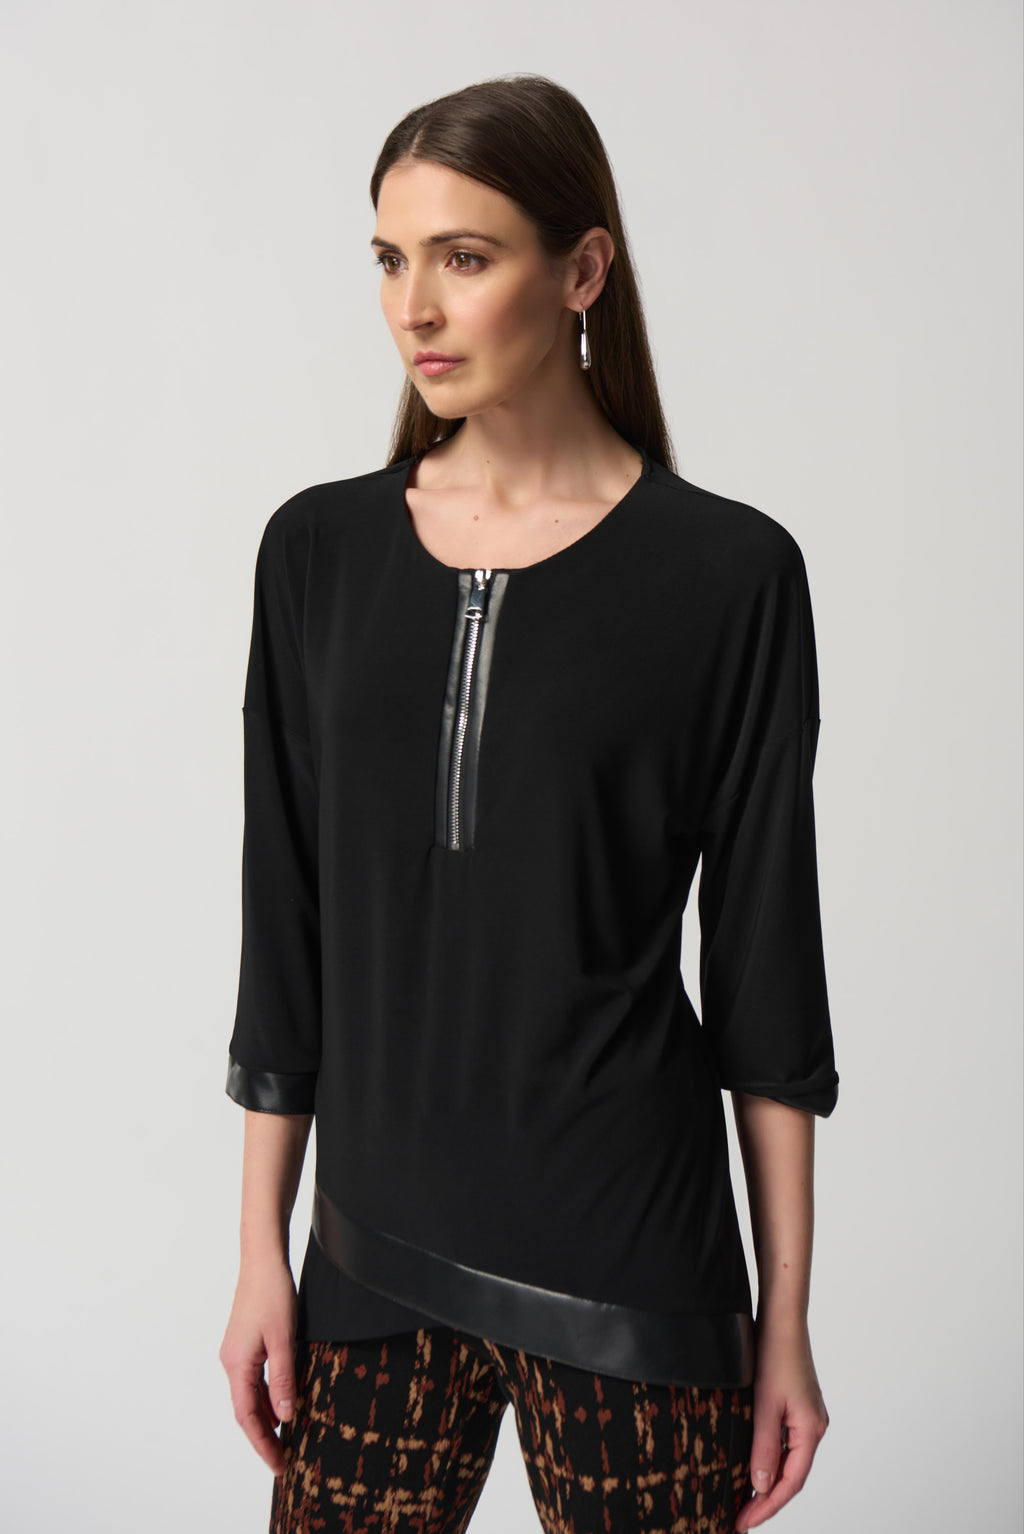 Joseph Ribkoff Knit Shirt TOP 6 Womens EDGY Vegan Leather Pockets BLACK RV  $200